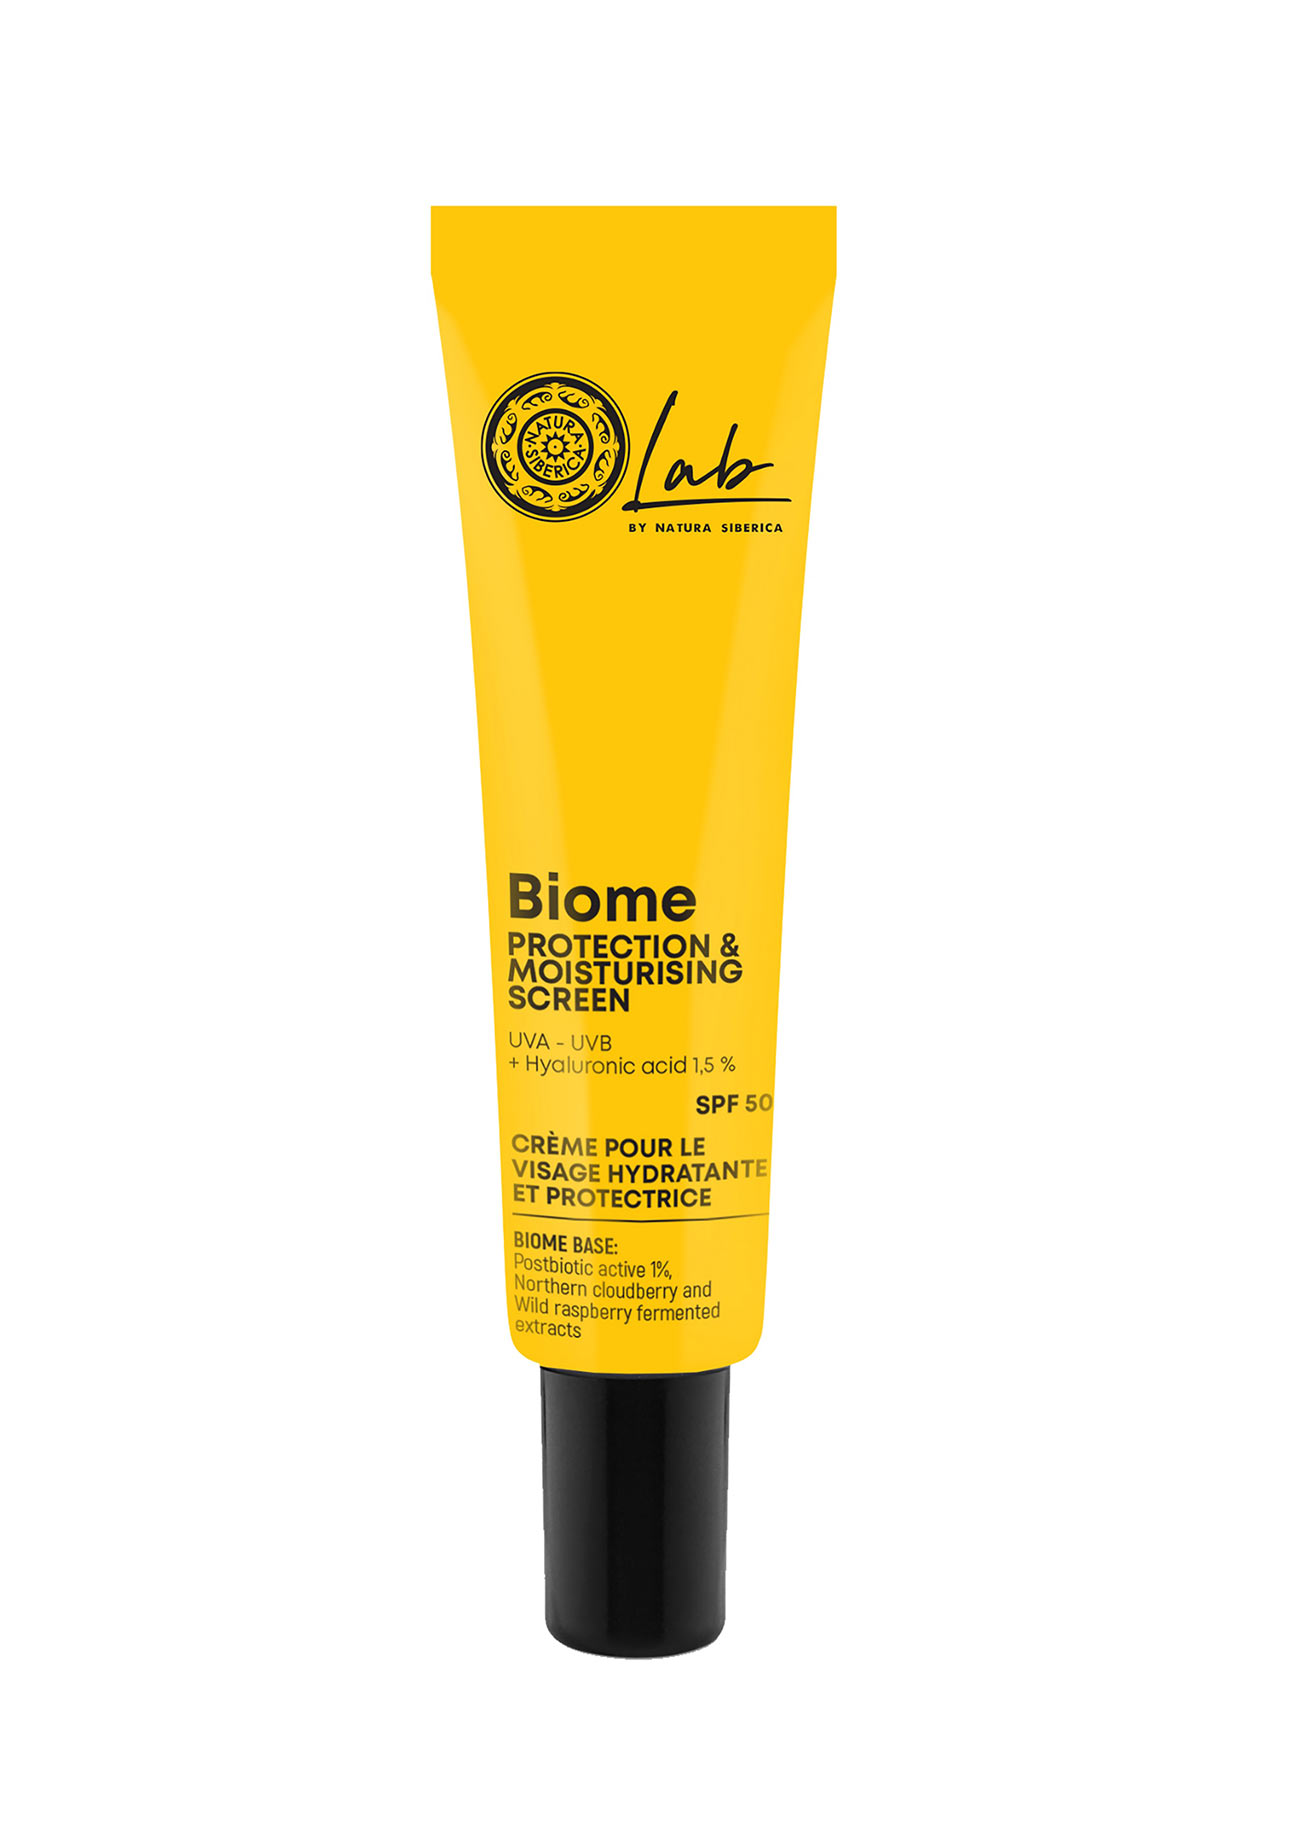 Biome Moisturising Protecting Cream